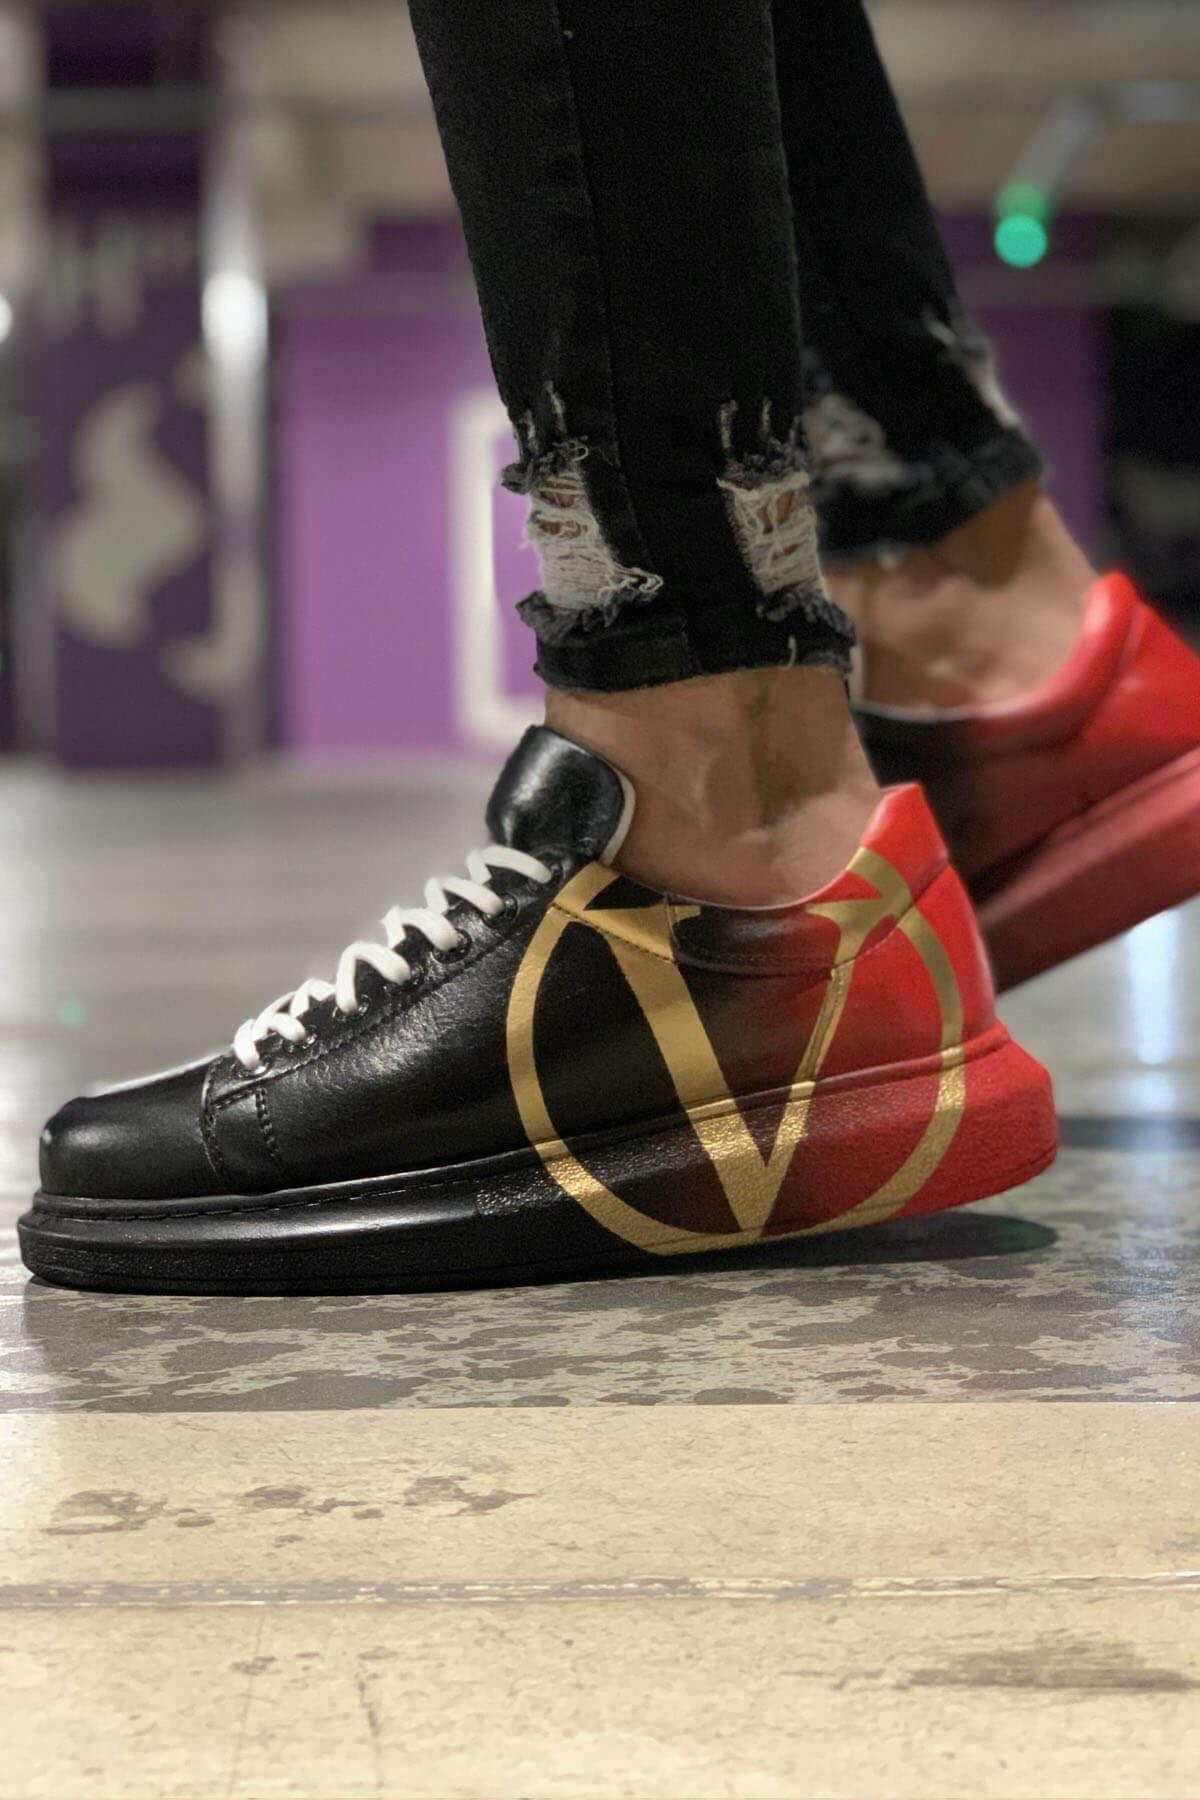 CH254 Men's Unisex Red-Black Casual Sneaker Sports Shoes - STREET MODE ™